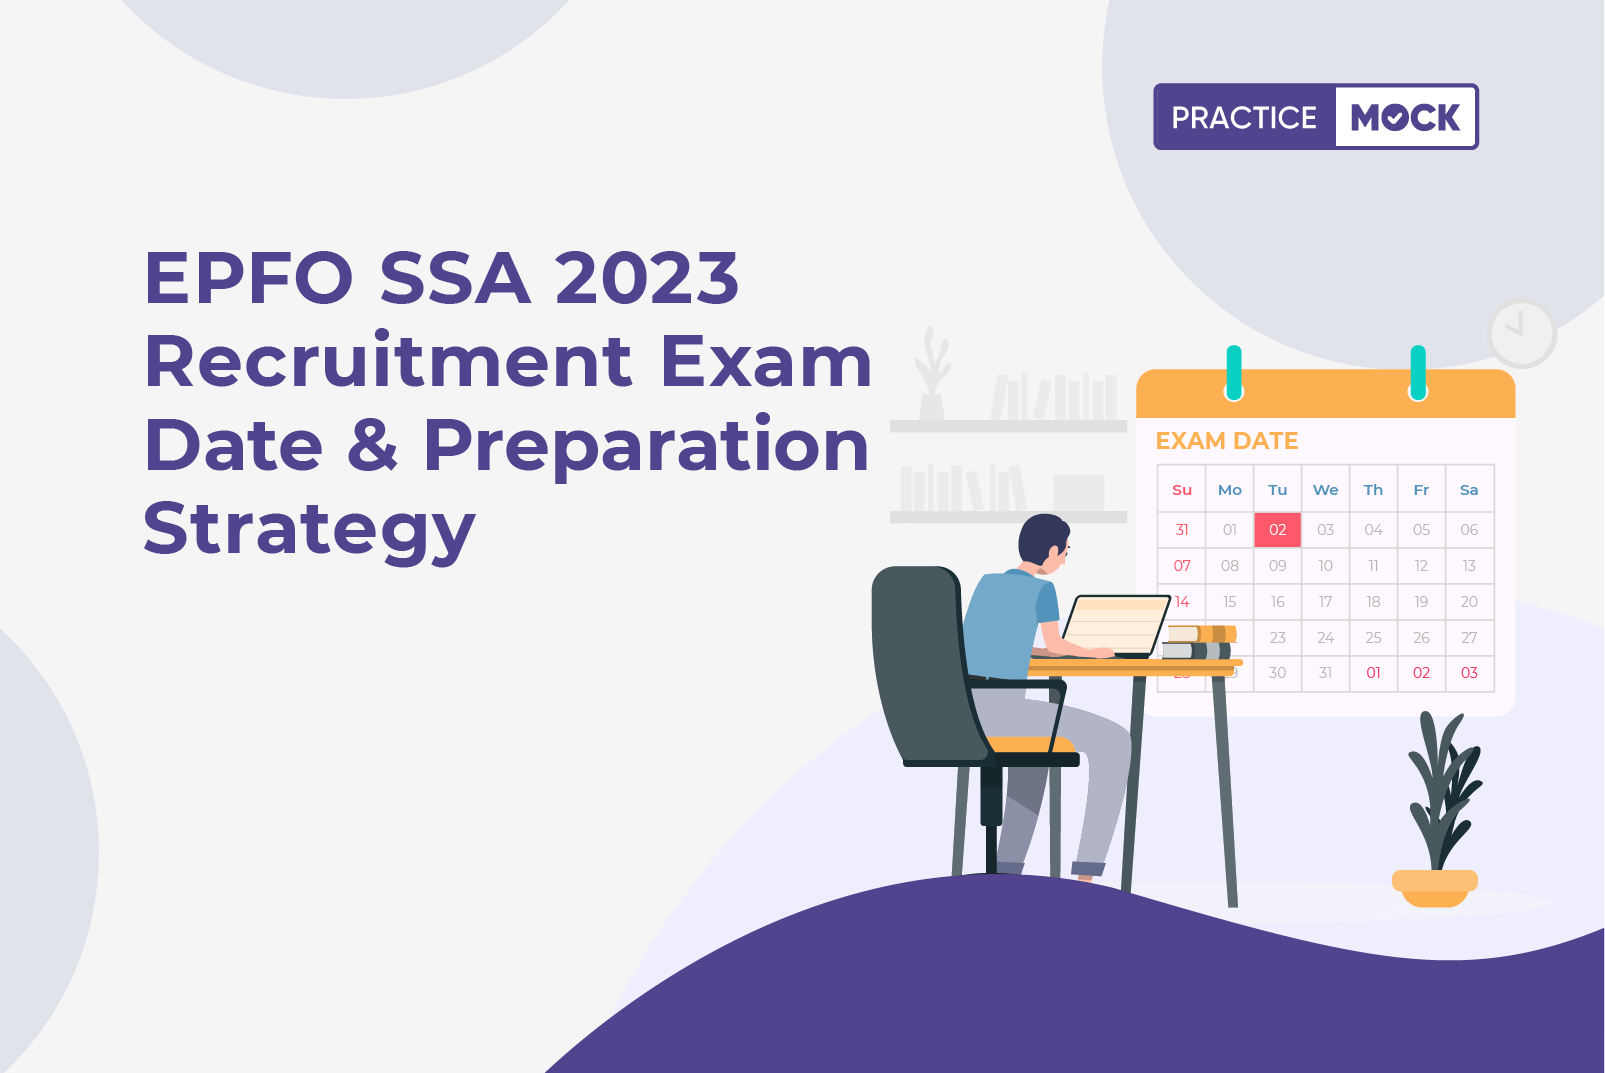 EPFO SSA Recruitment 2023 Exam Date & Preparation Strategy